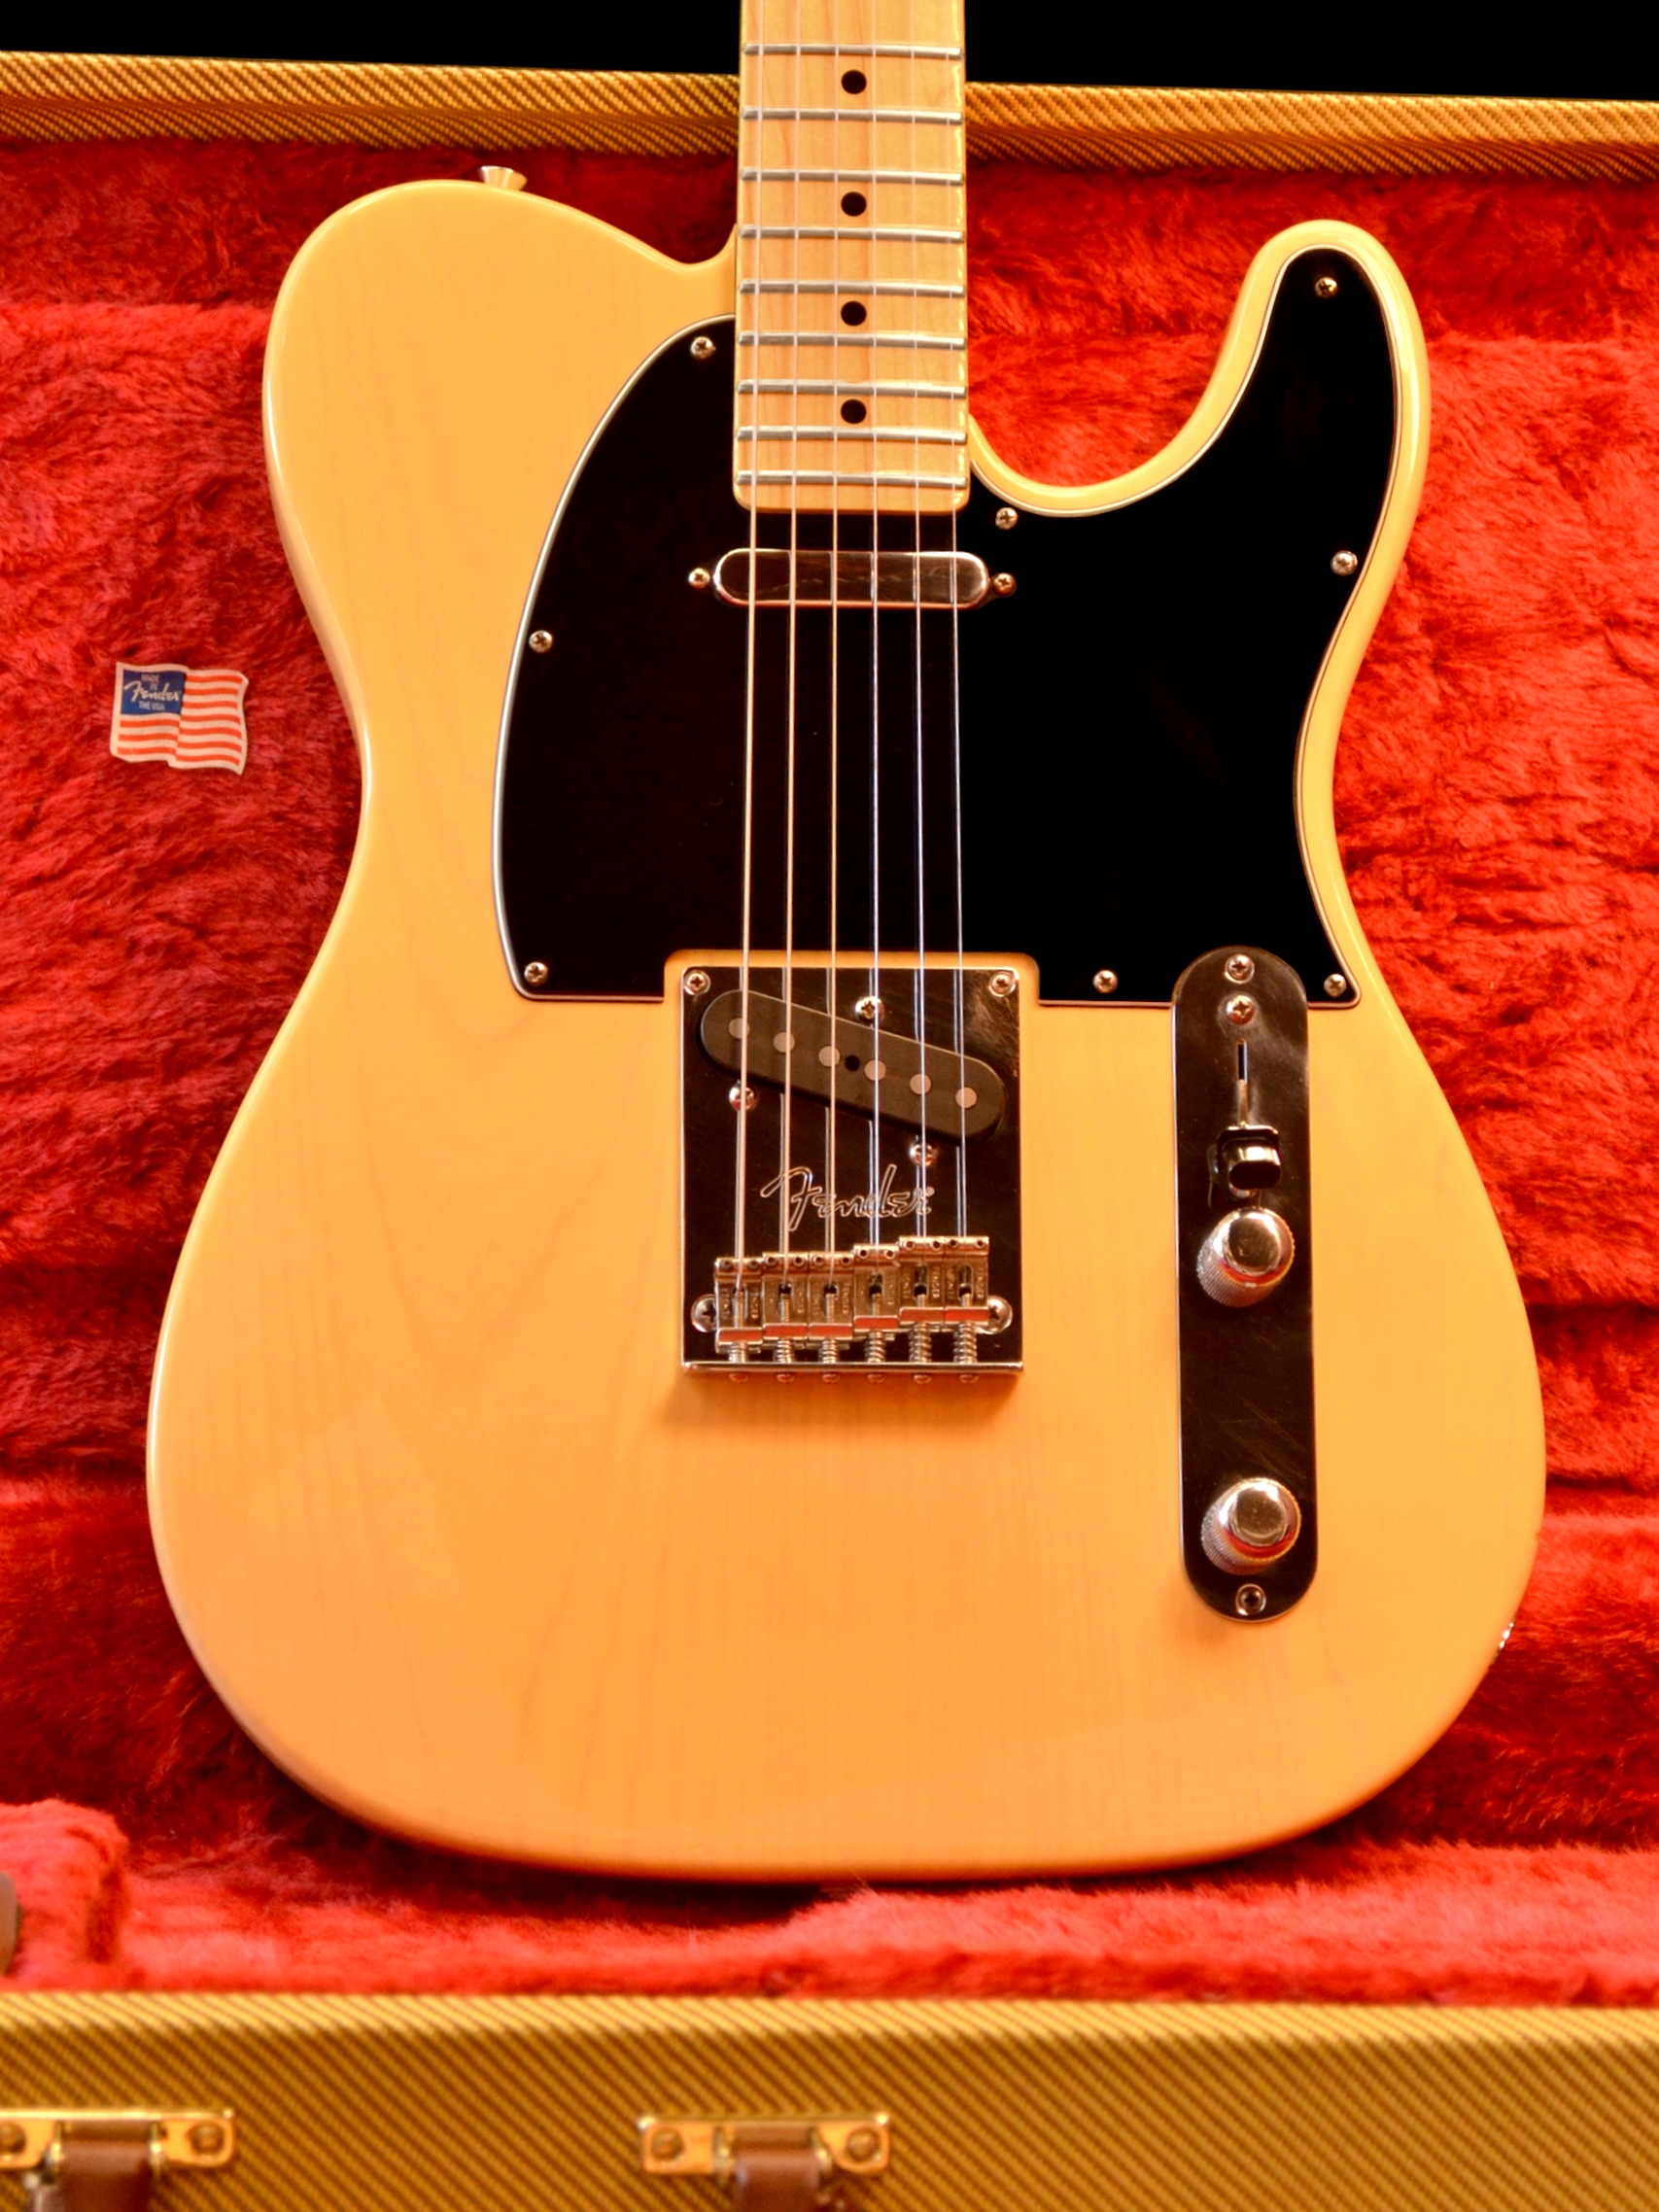 Fender Telecaster, 60th Anniversary model, 2011 – Blackguard Blonde